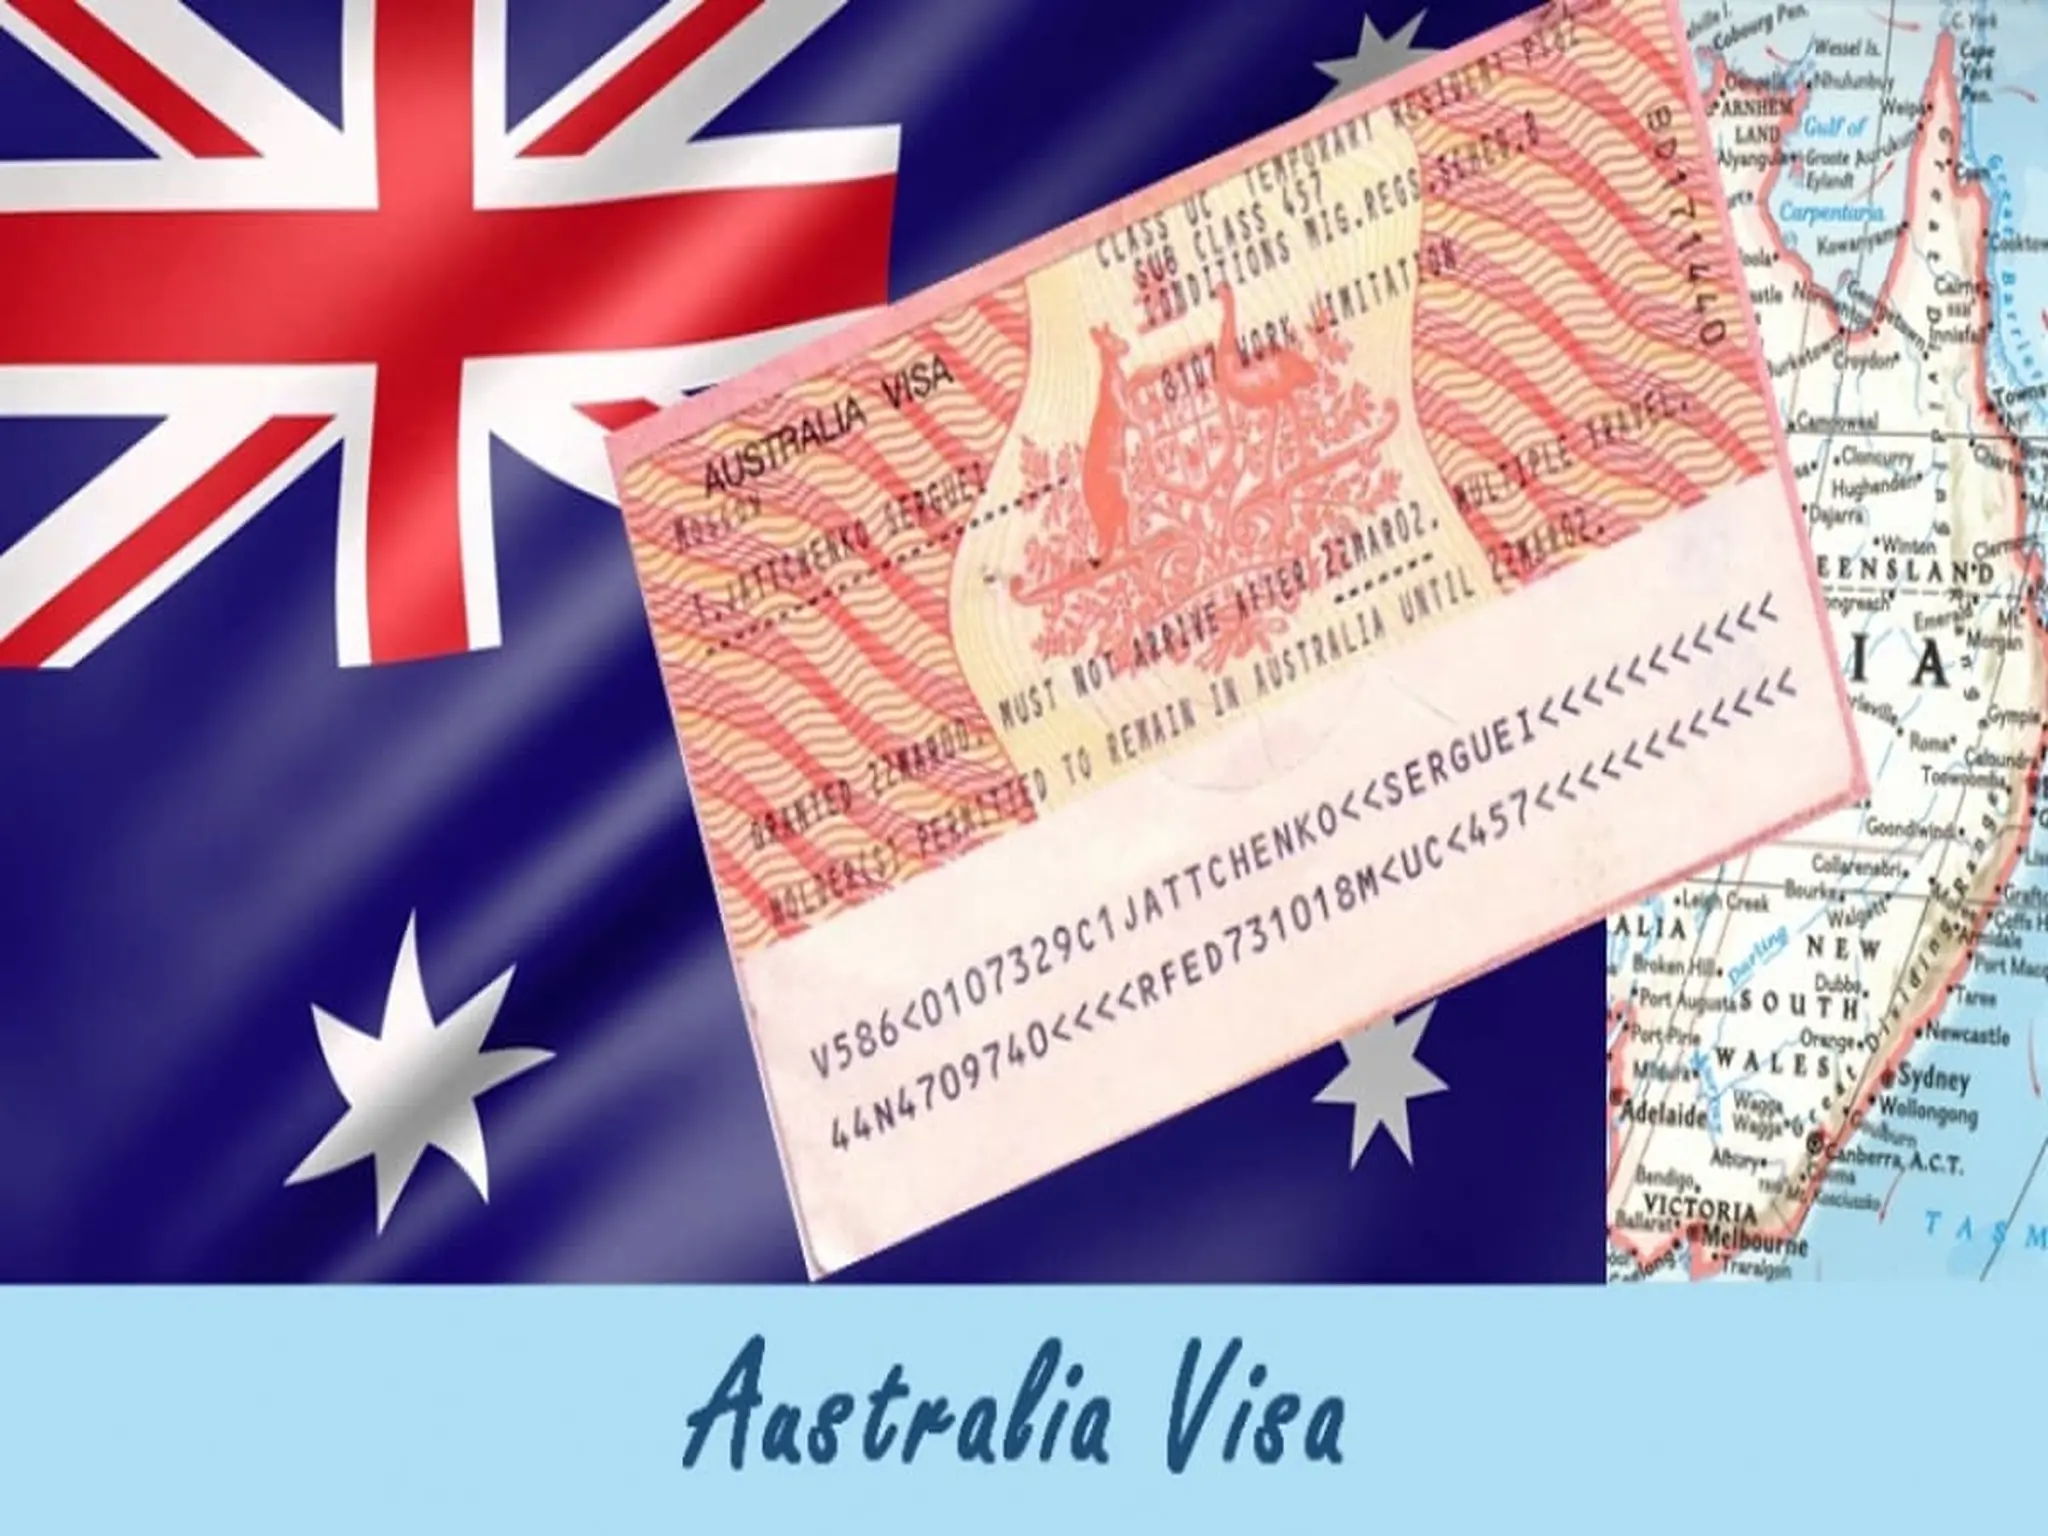 Australia announces comprehensive reform of its visa program